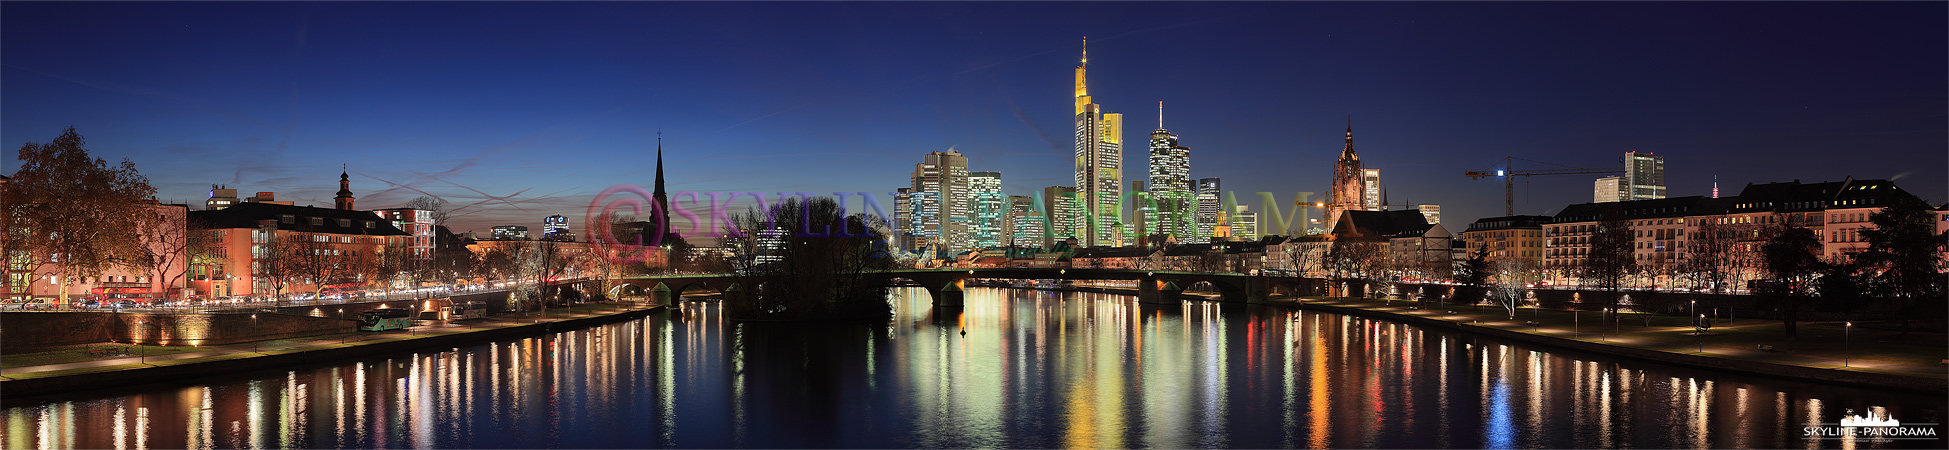 Frankfurt bei Nacht (p_00568)